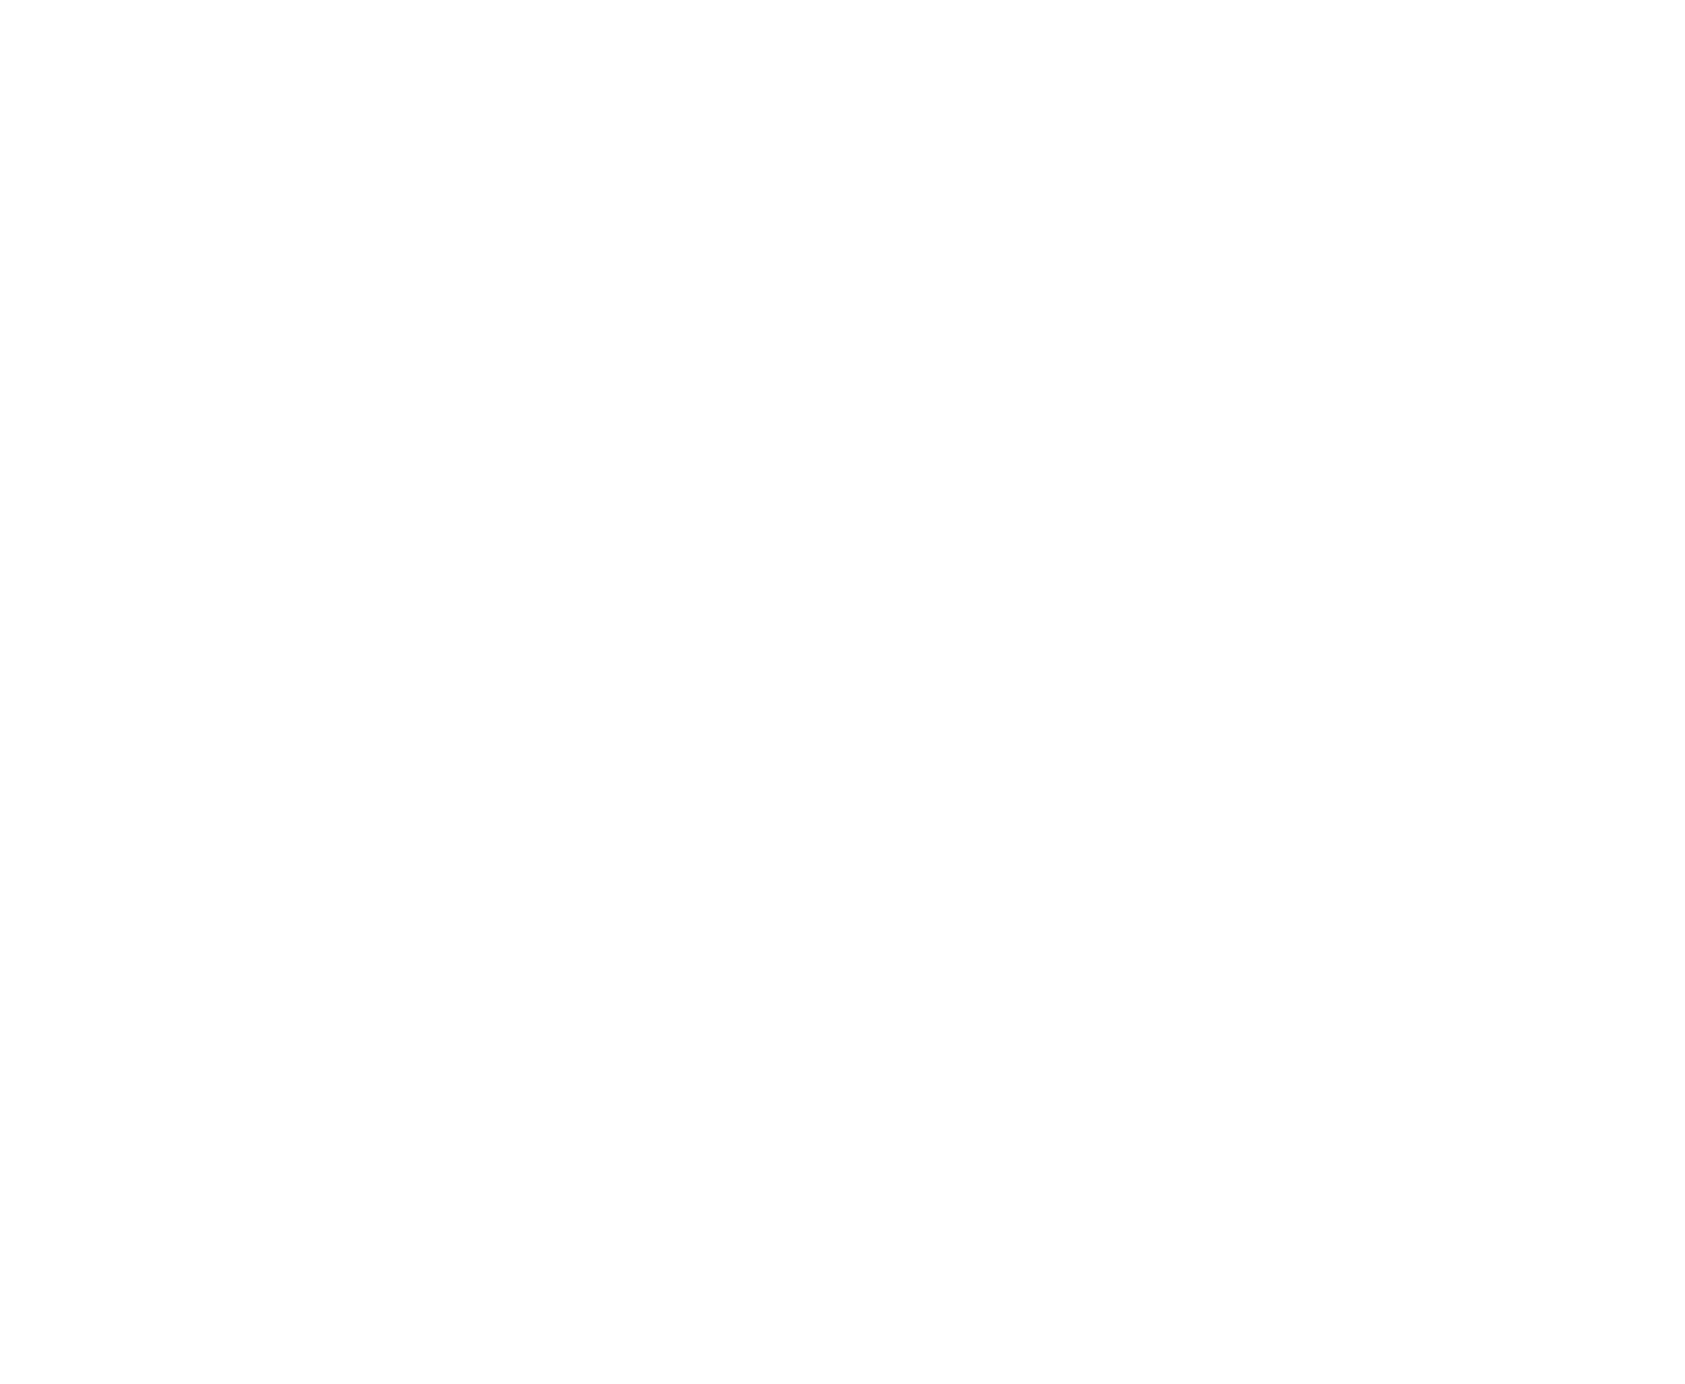 Tayseer Arar Food Industry